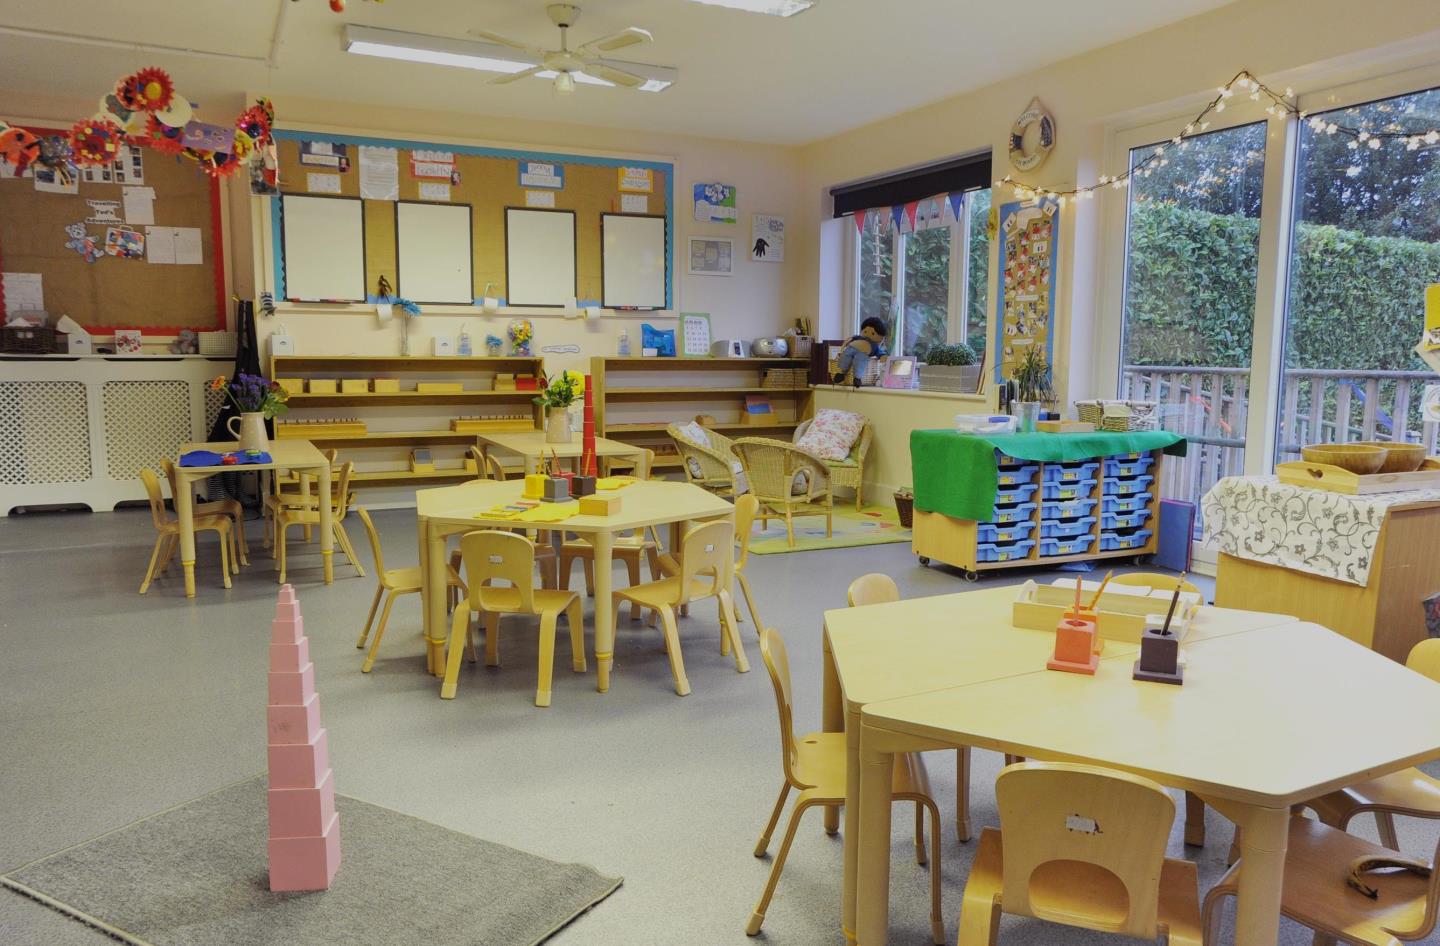 Bright Horizons Poole Montessori Day Nursery Poole 03300 574137